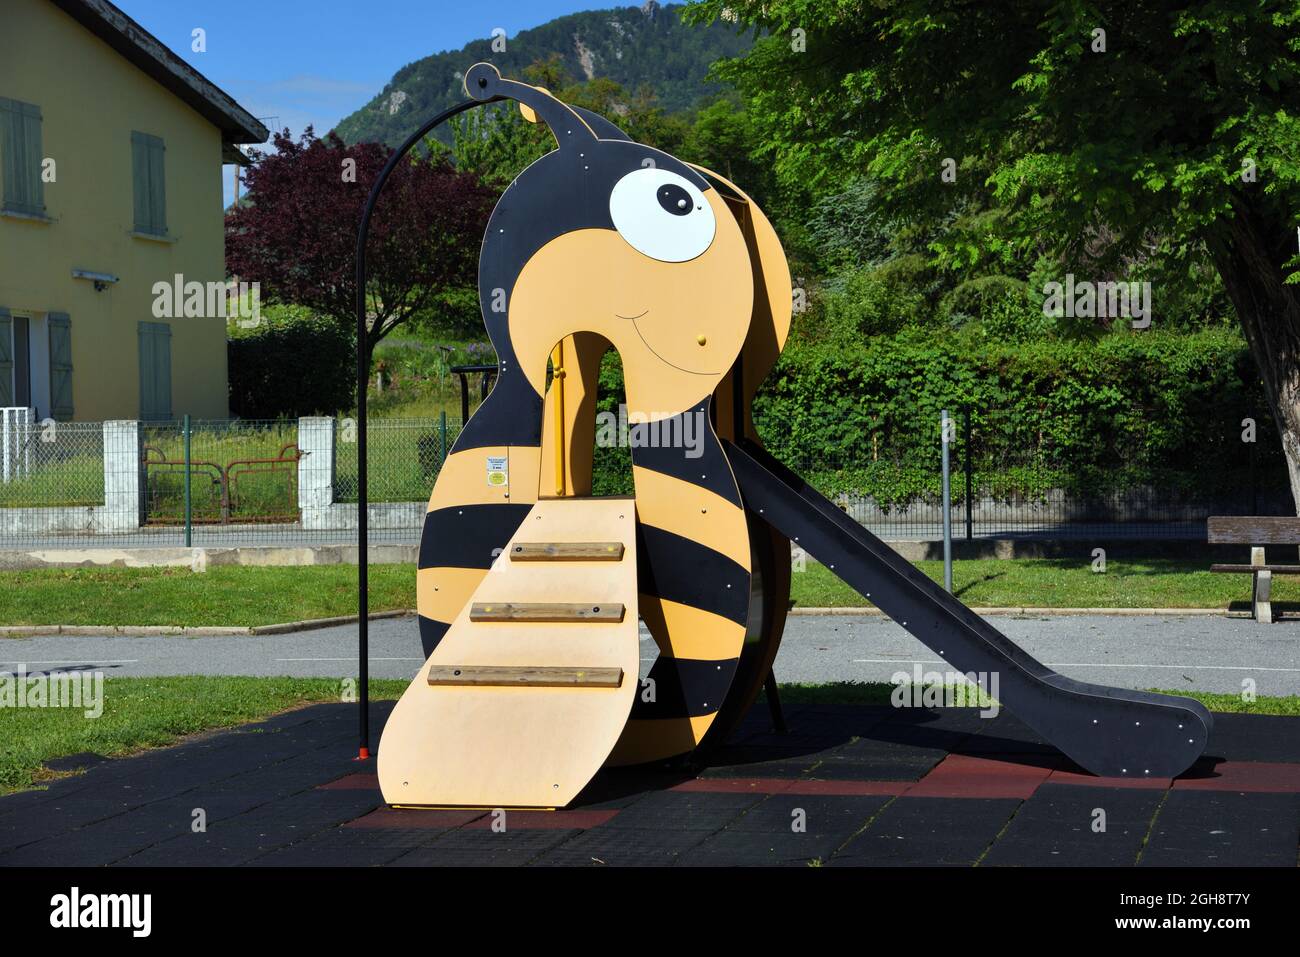 Bienenförmige Kinderspielplatzrutsche im Kinderspielplatz, Spielplatz oder Spielbereich Stockfoto